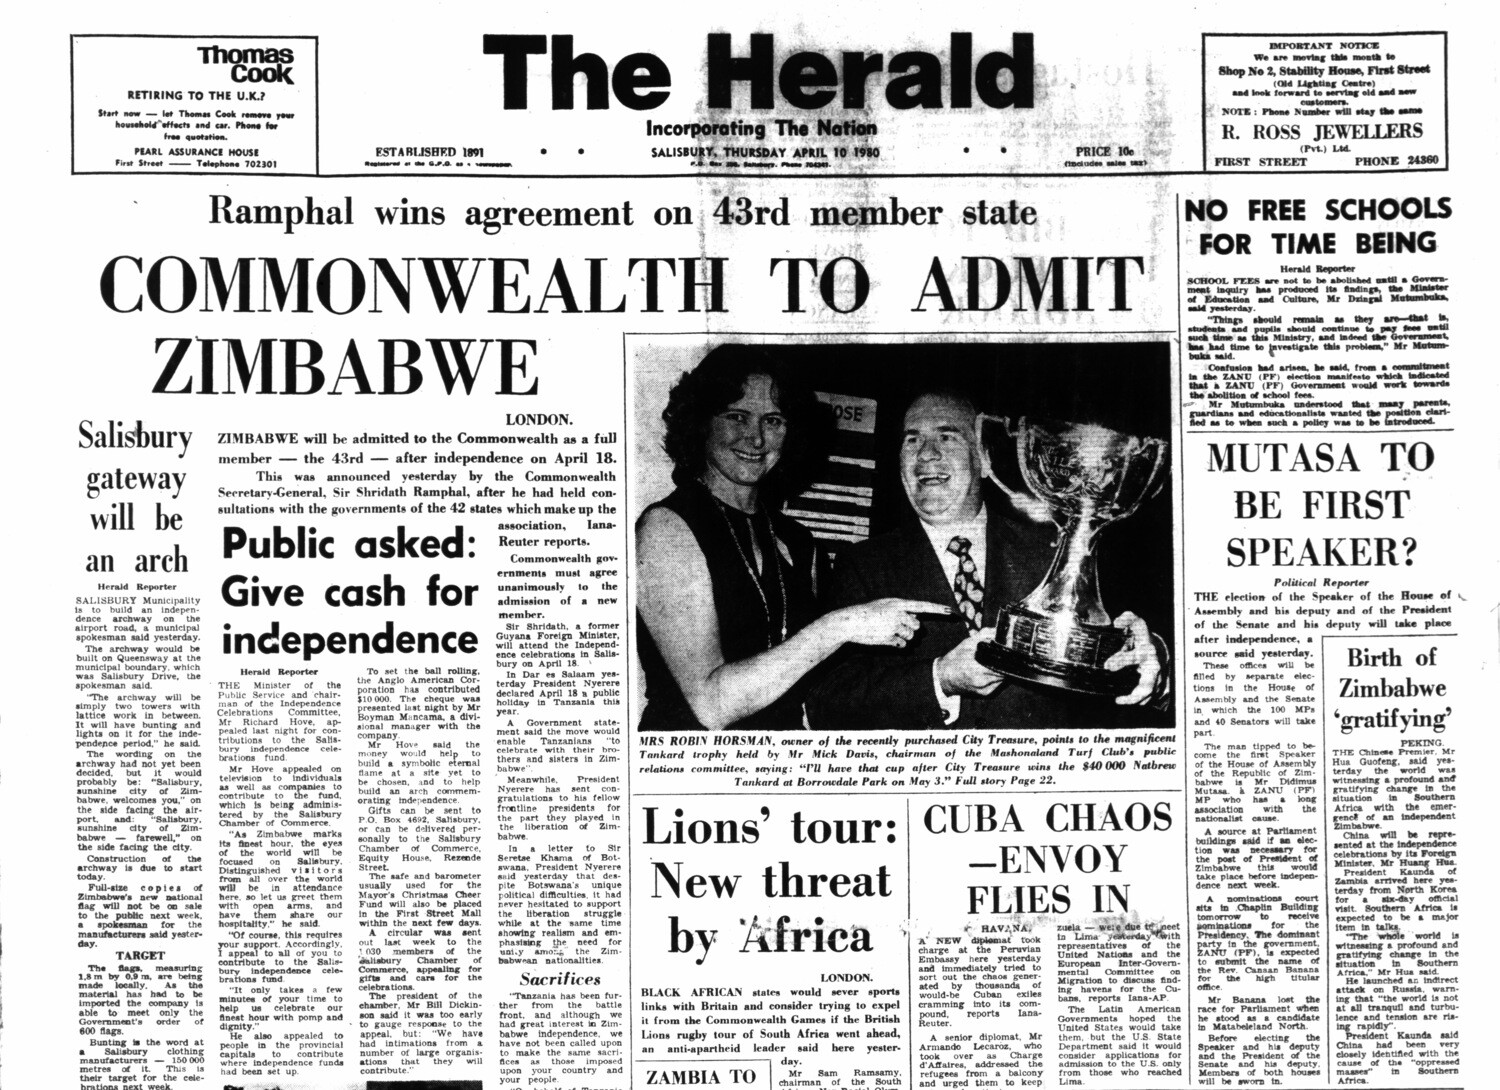 The Herald - 10 April 1980